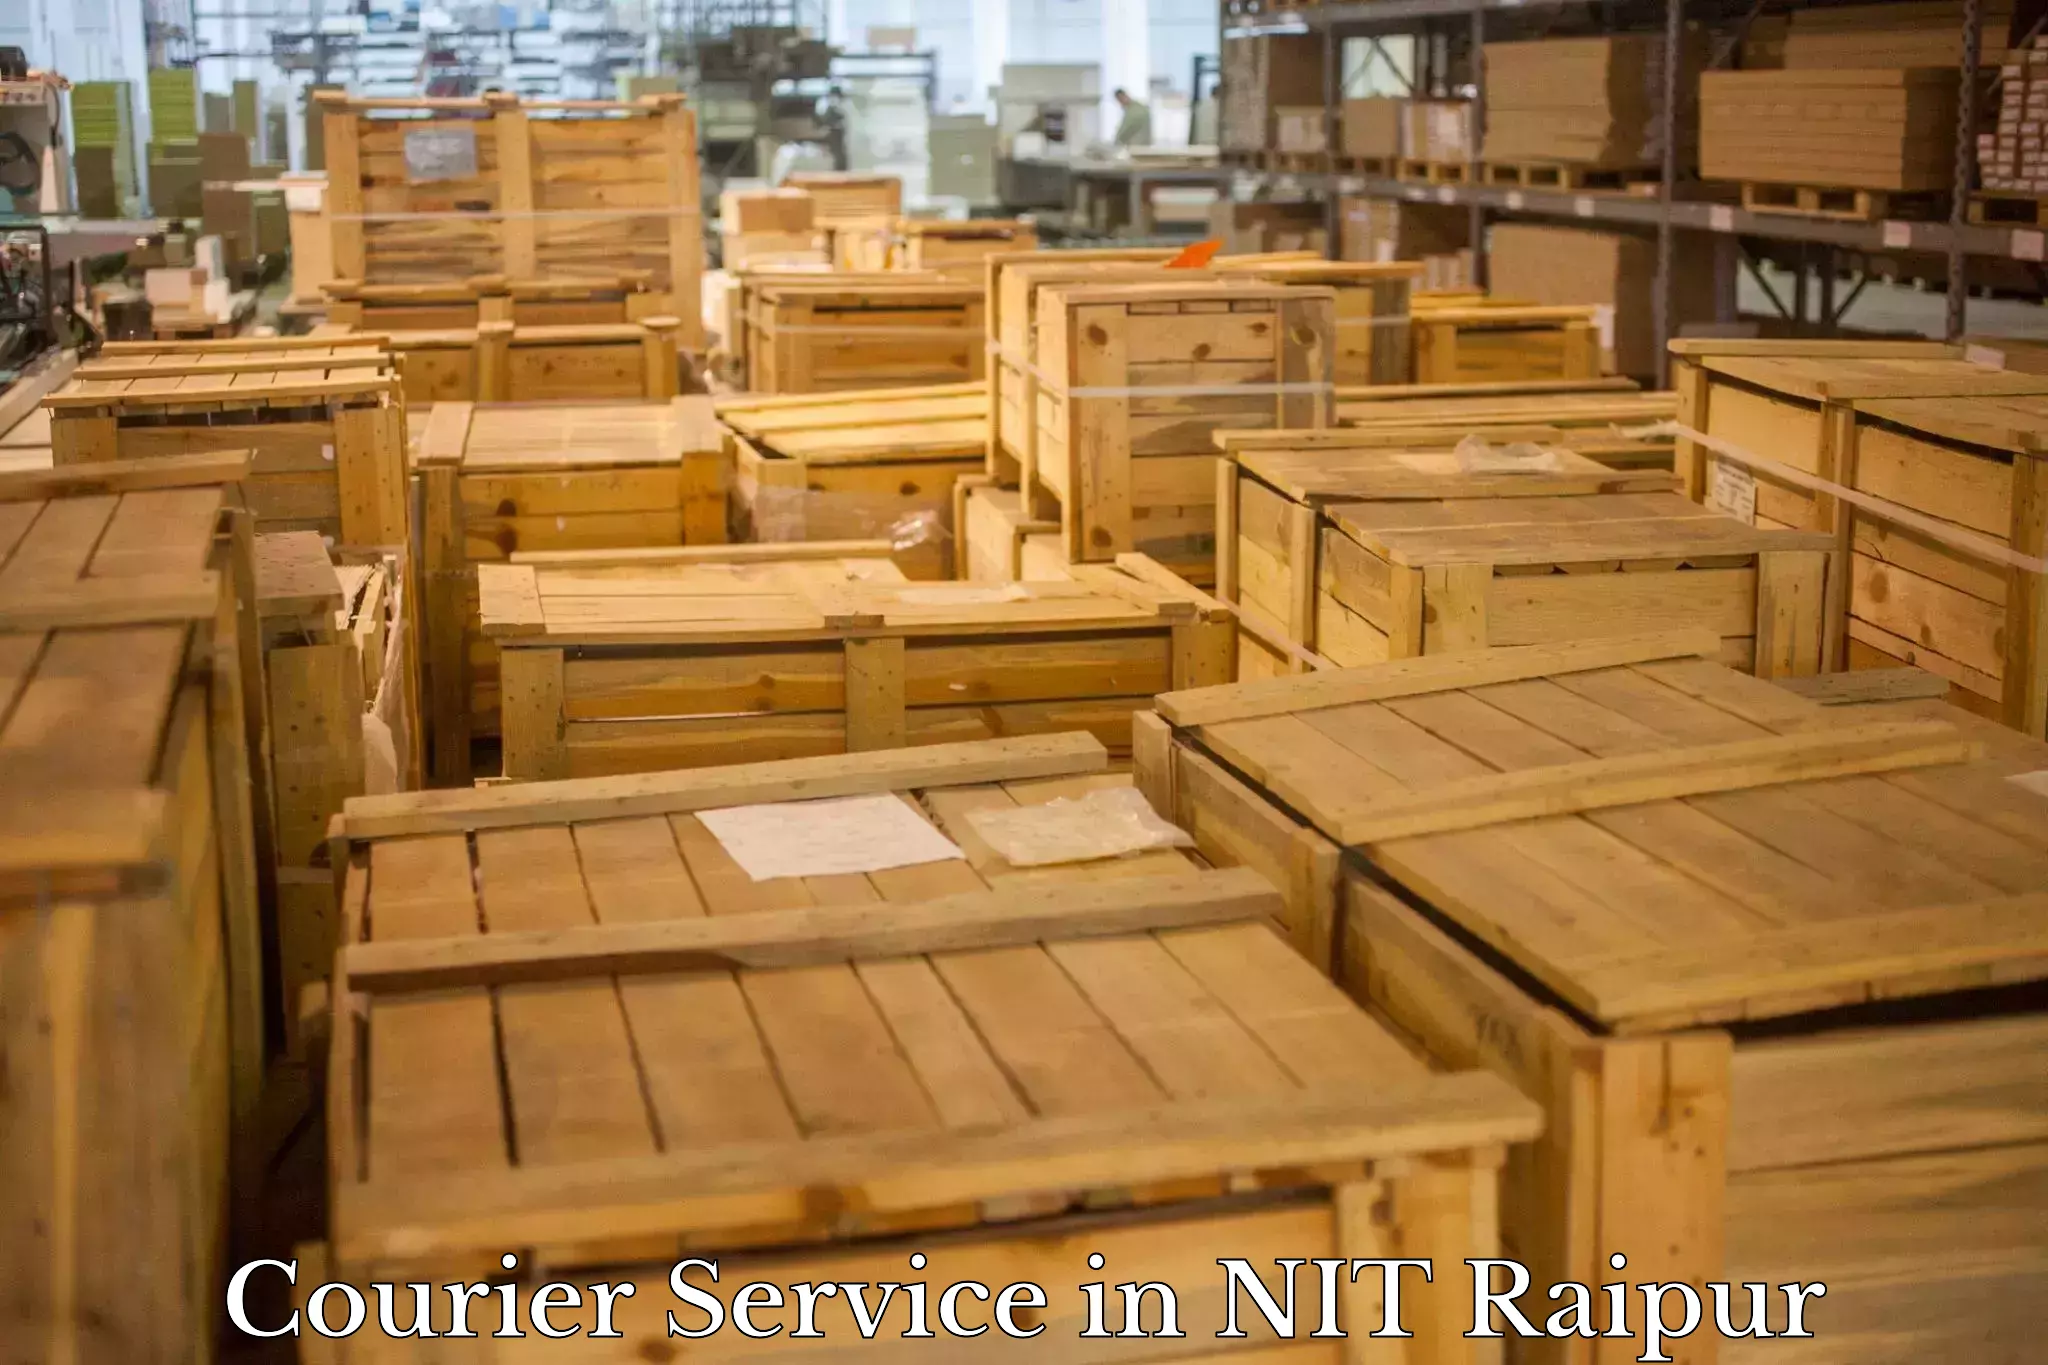 Tracking updates in NIT Raipur